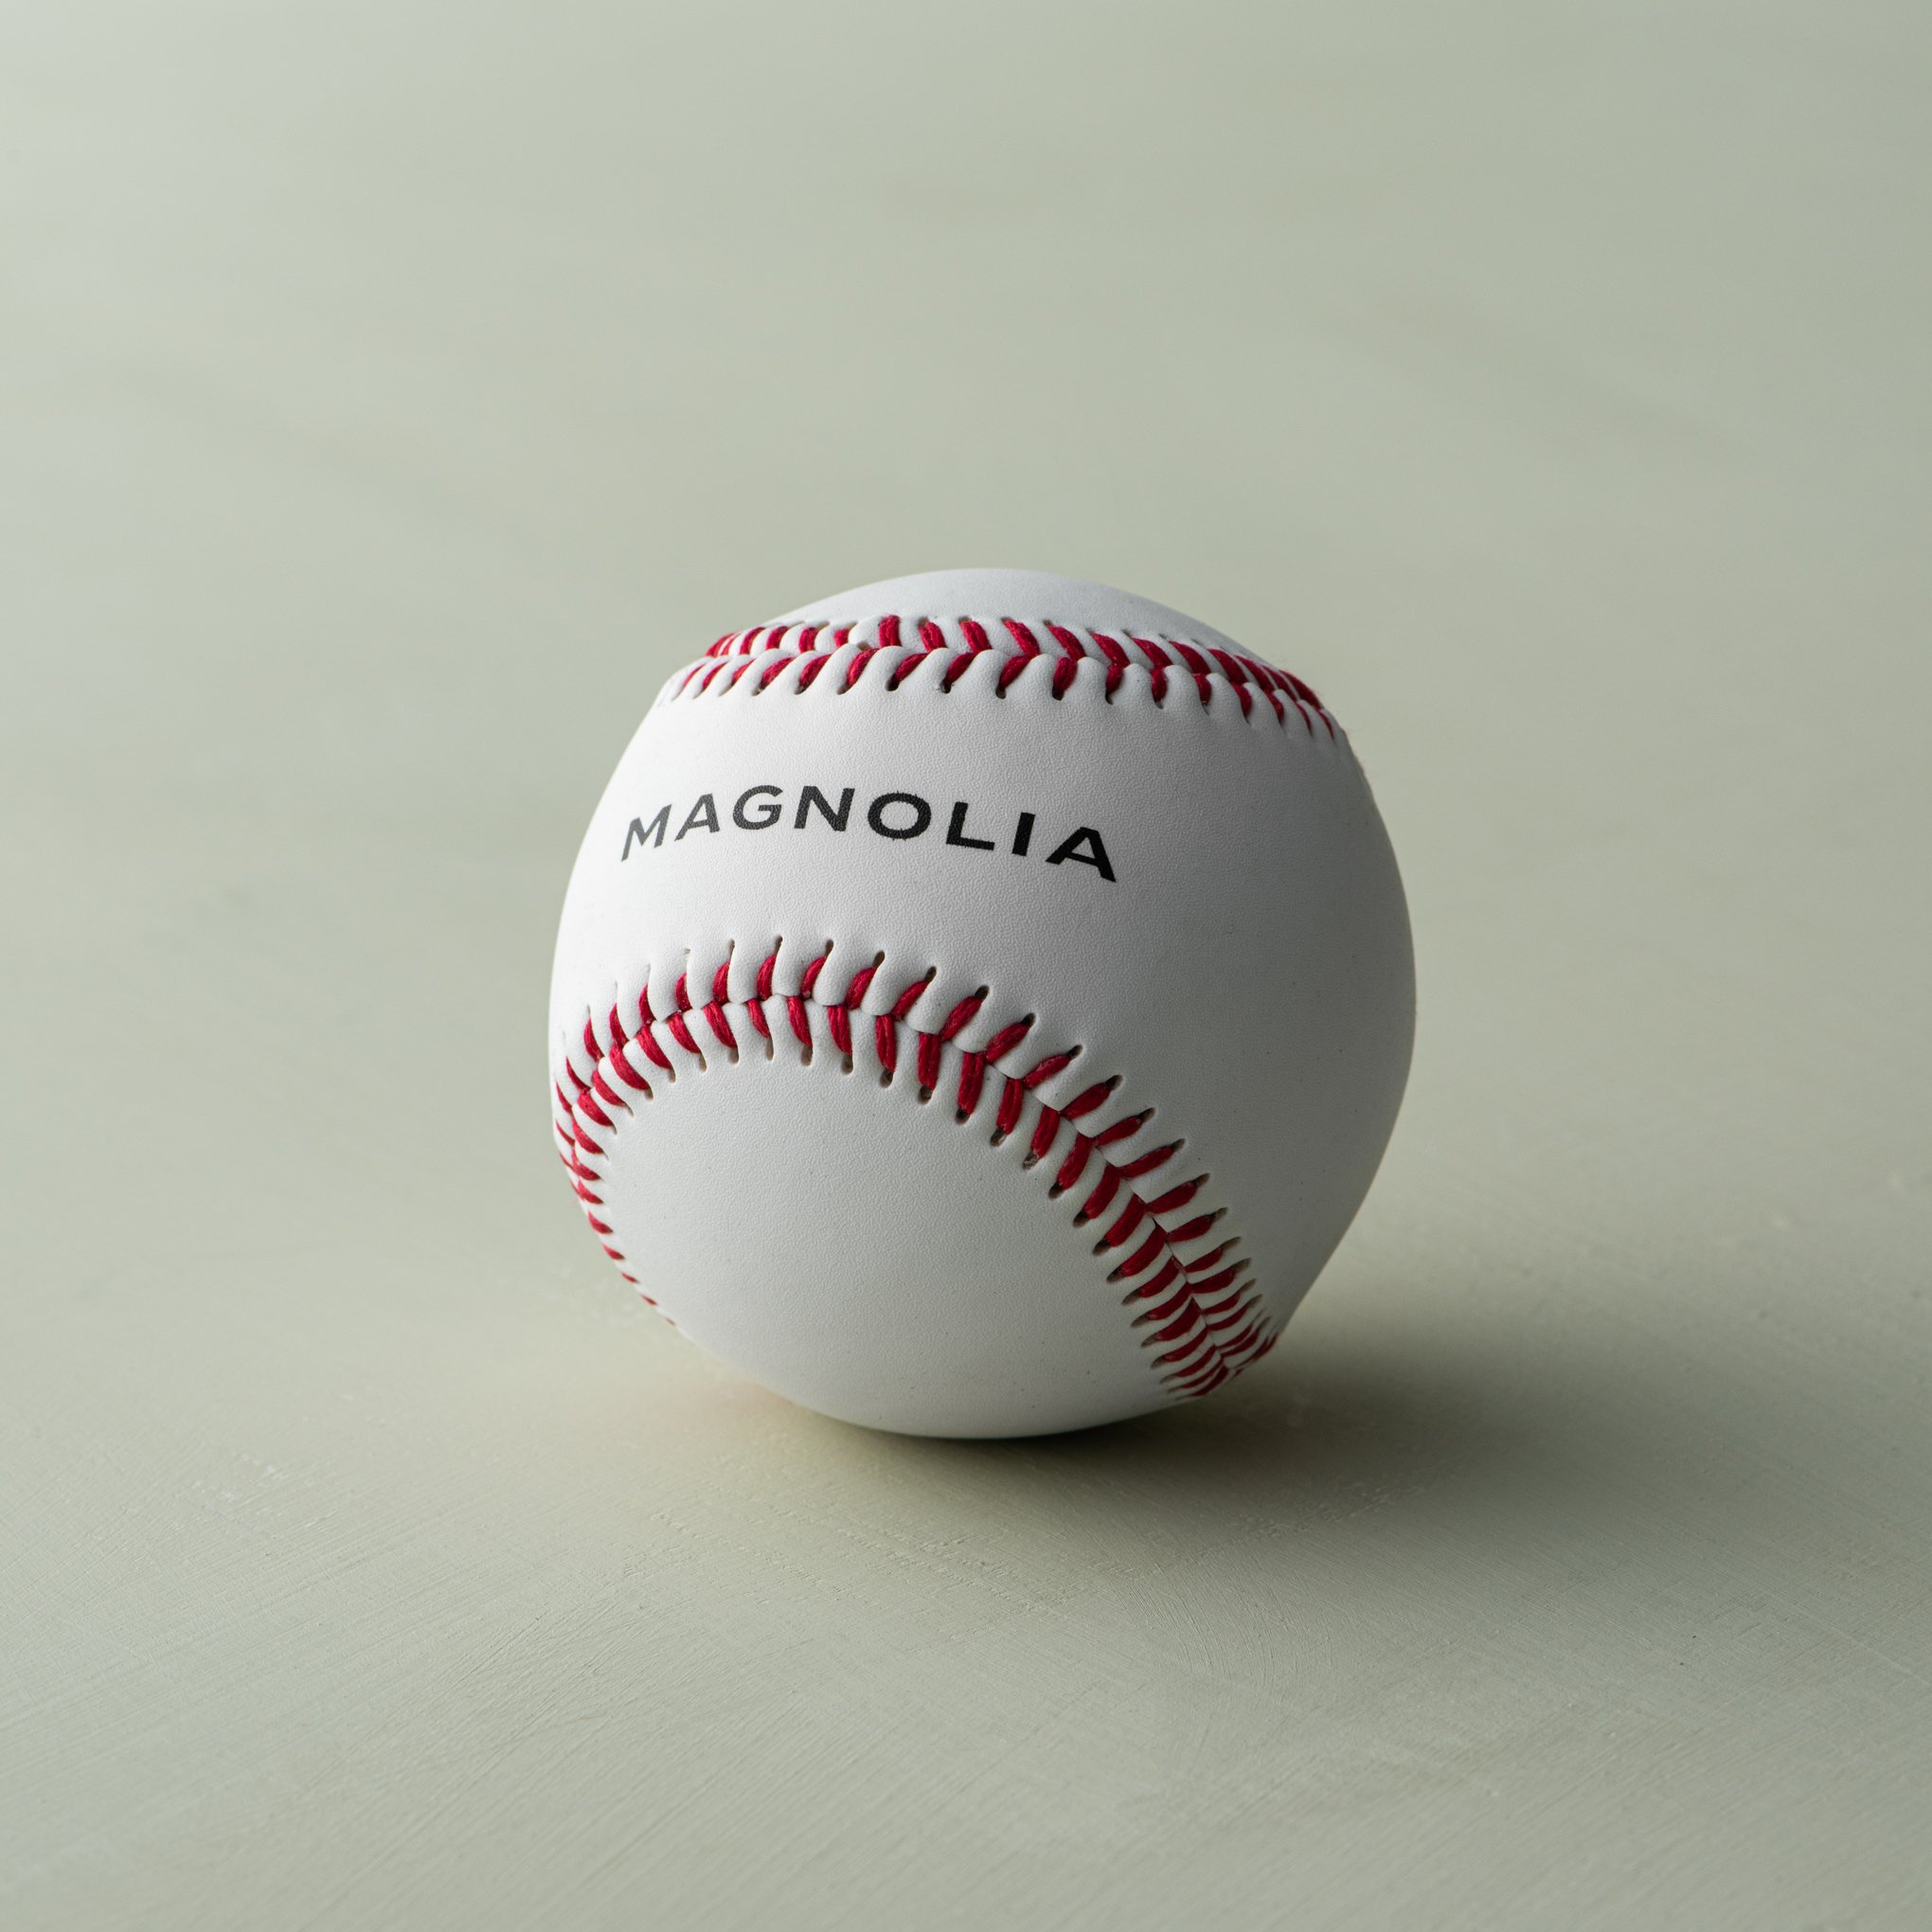 Magnolia White Leather Baseball